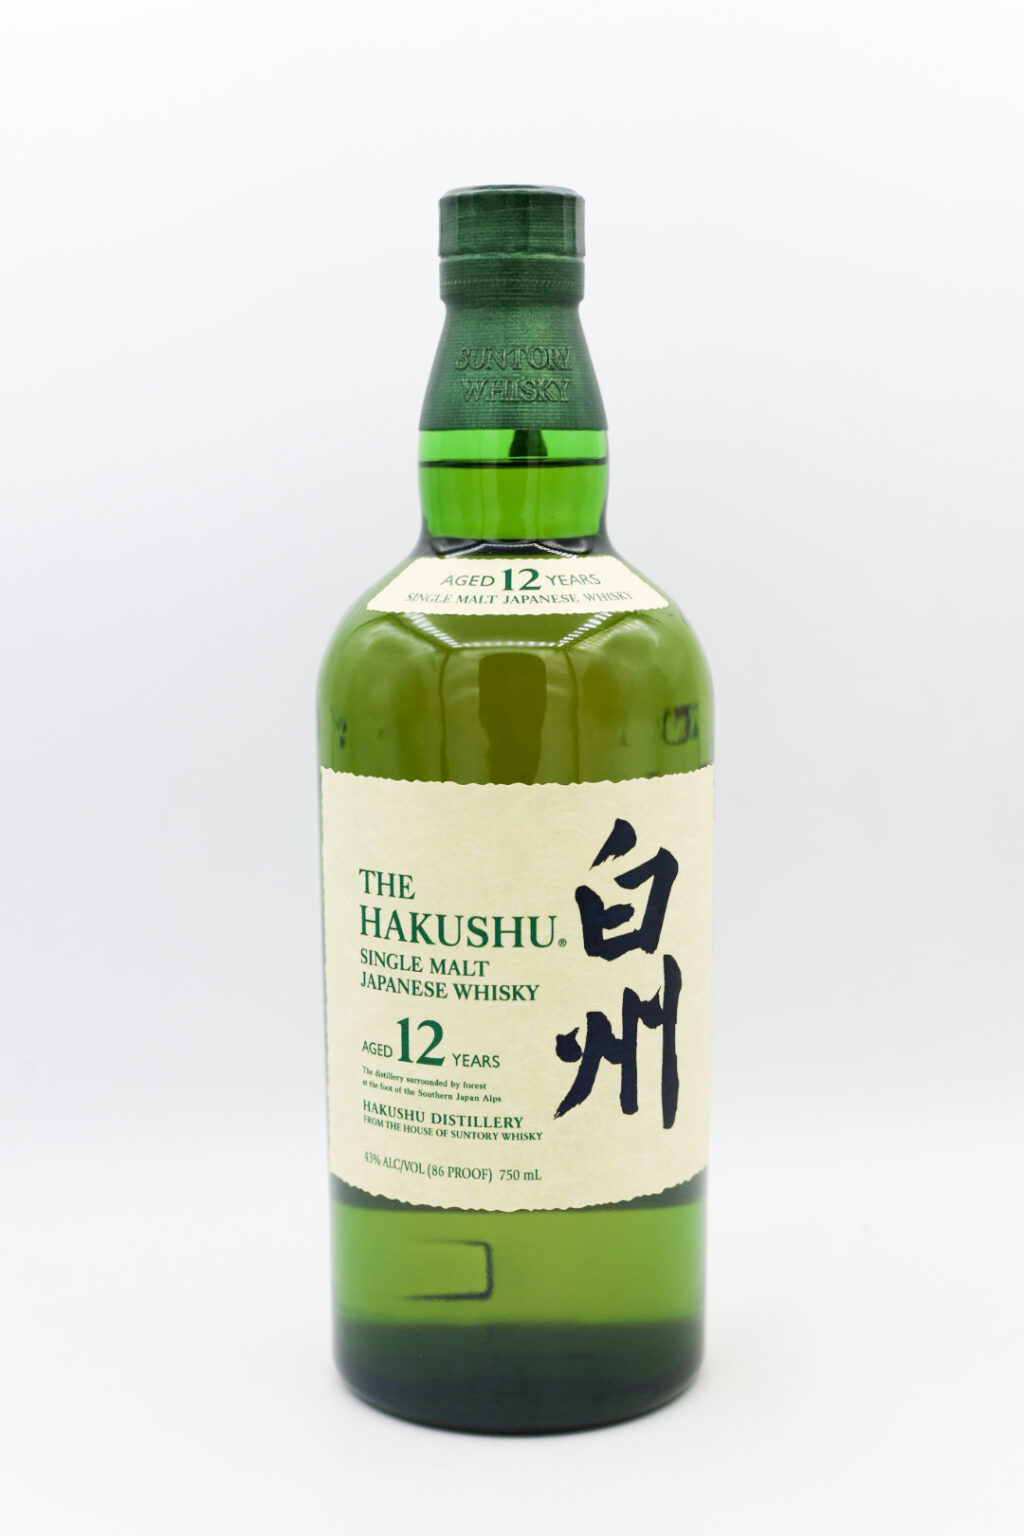 Hakushu Whisky 12YR 86 proof